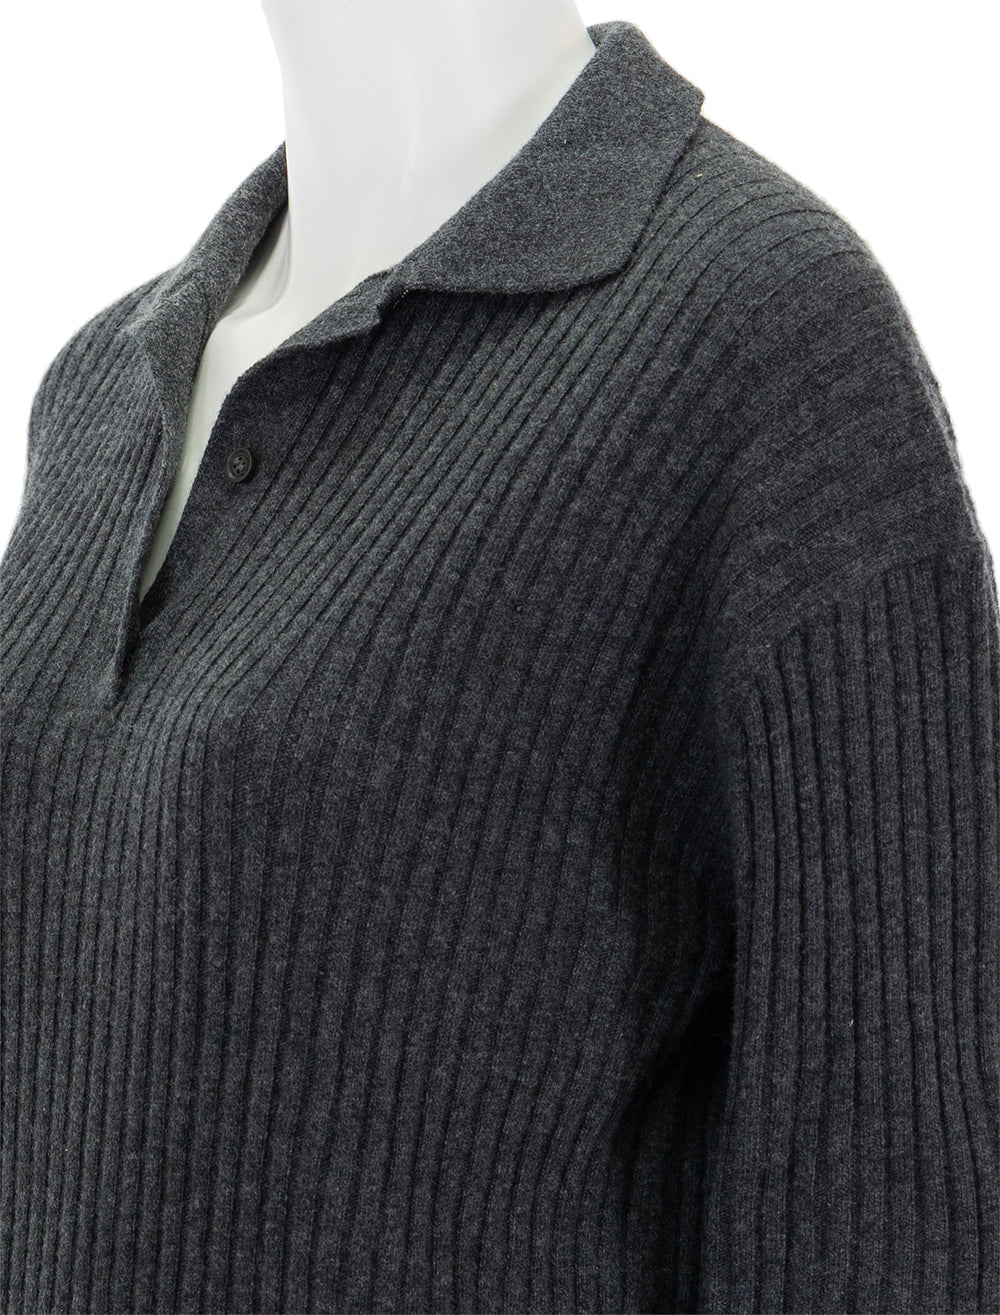 Close-up view of Nili Lotan's ramona polo sweater in dark charcoal melange.